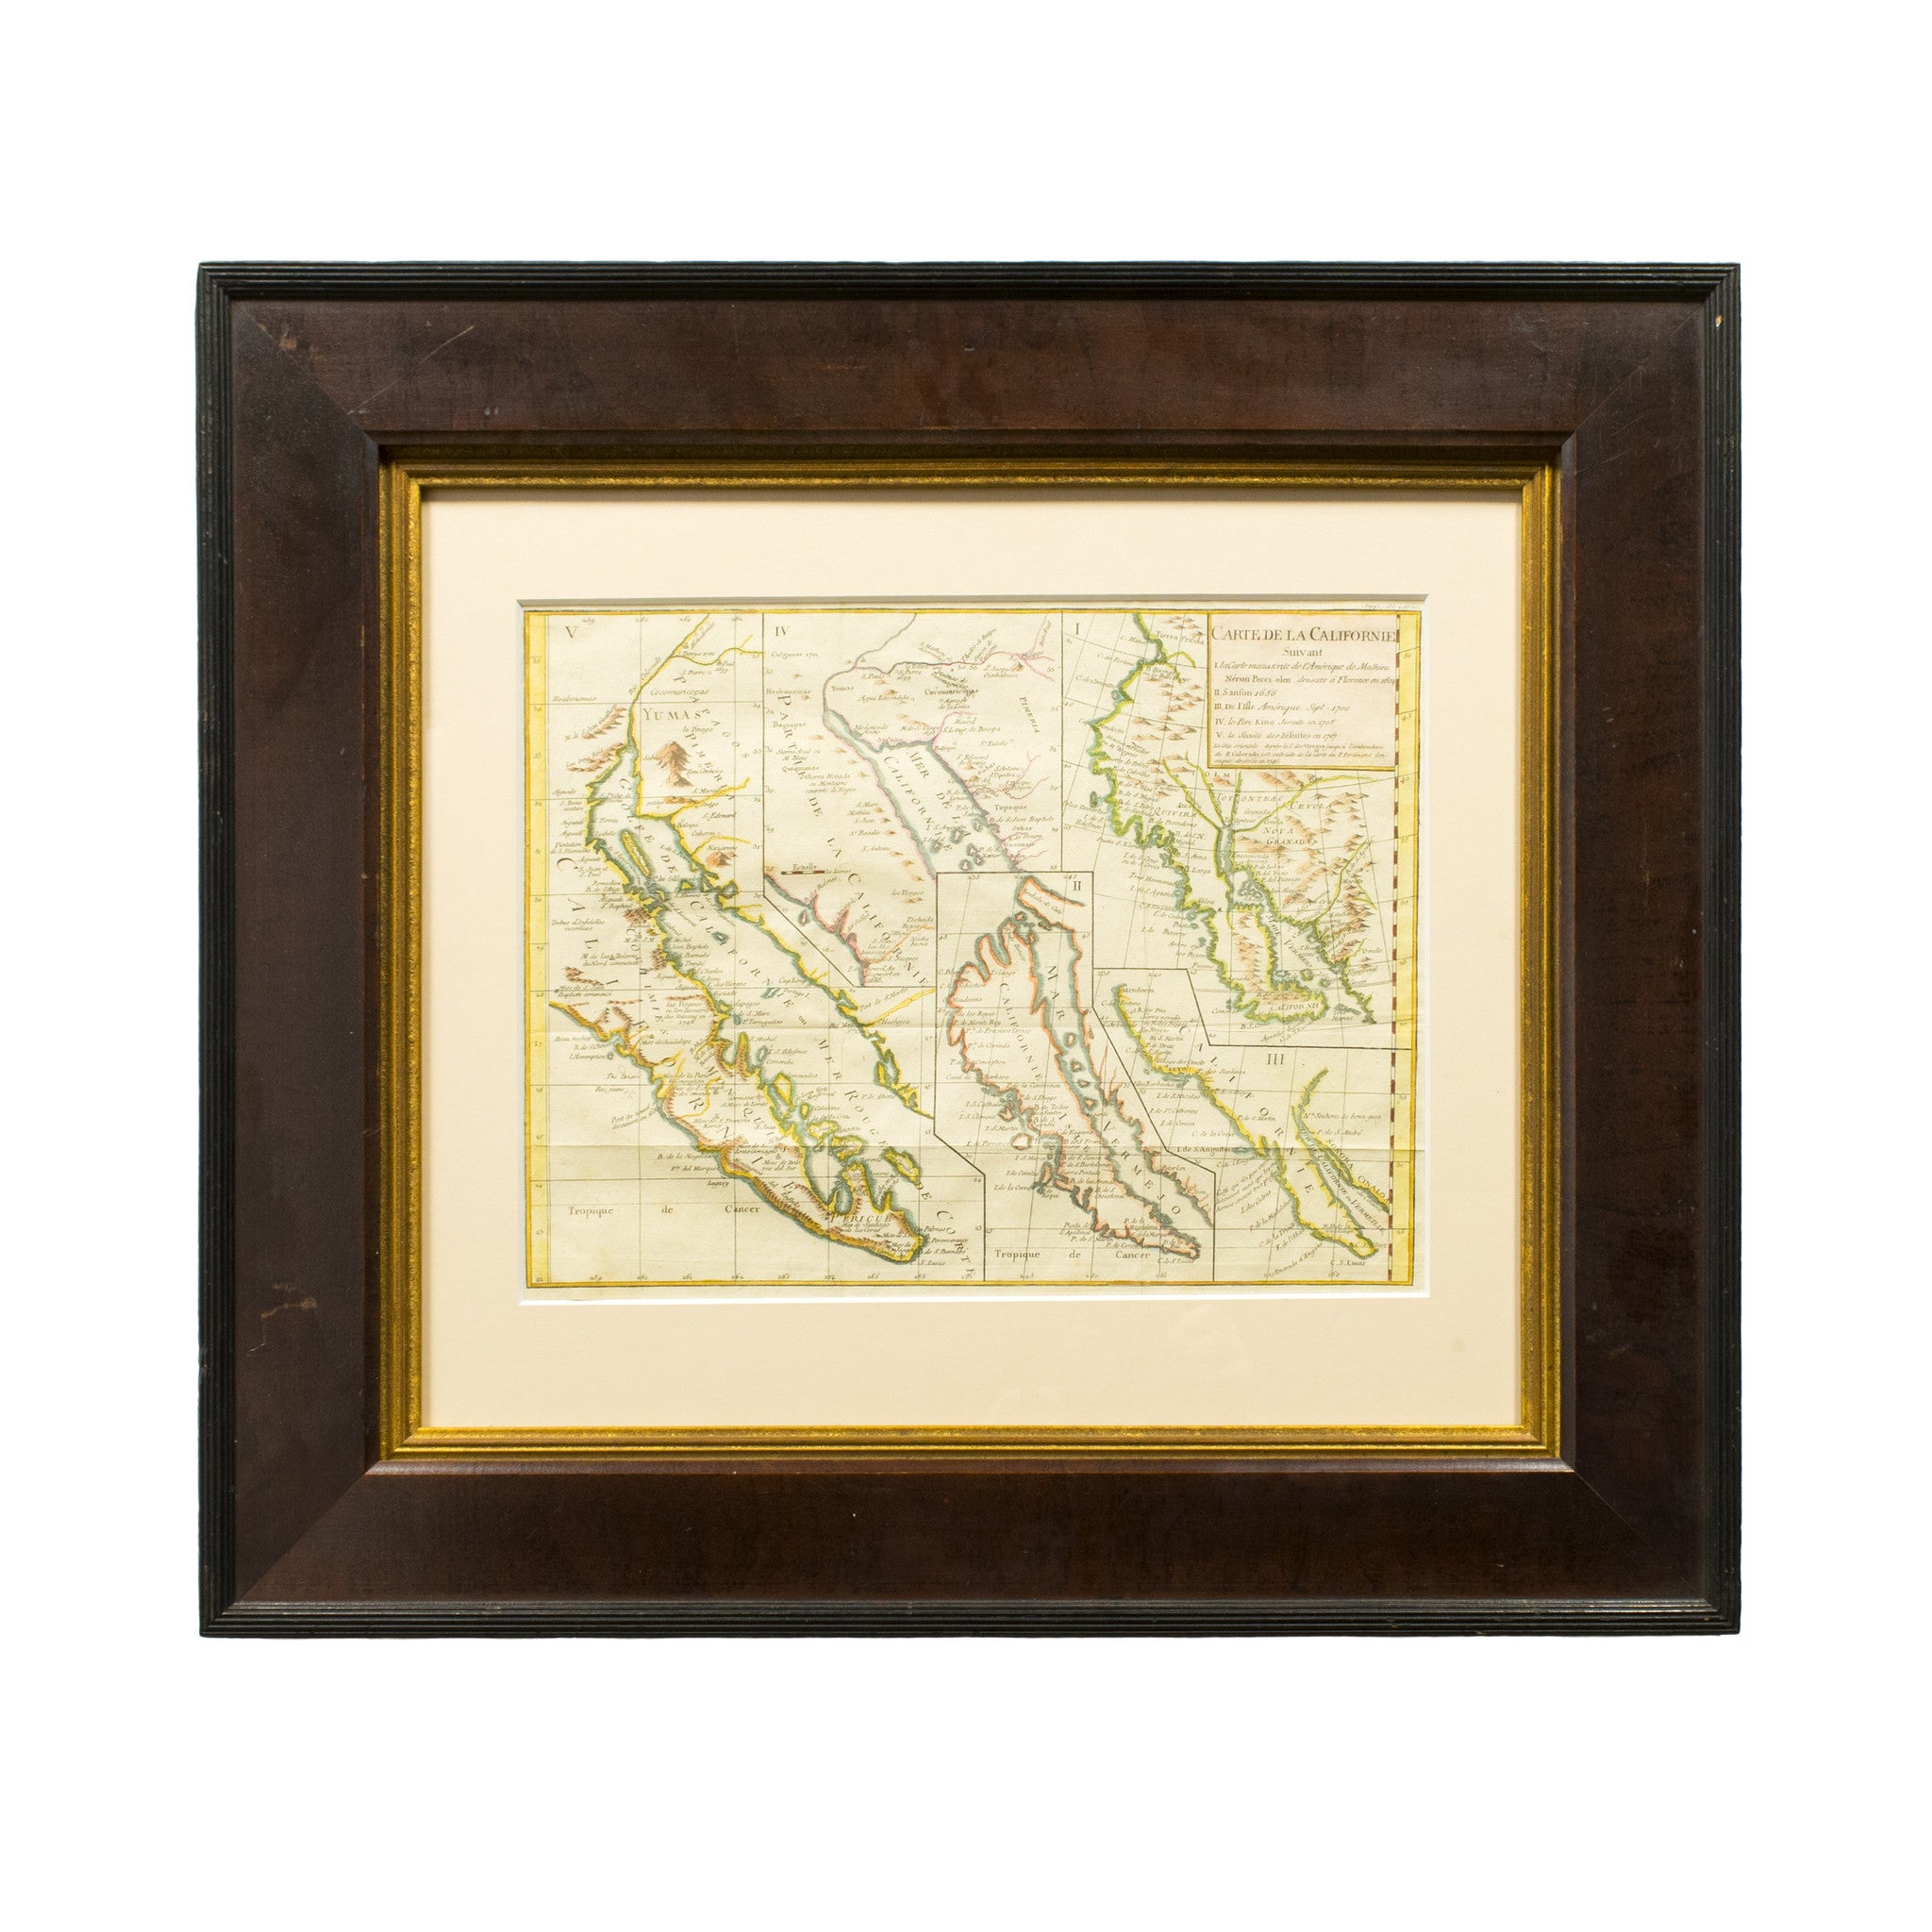 Map of California 1768, Furnishings, Decor, Map